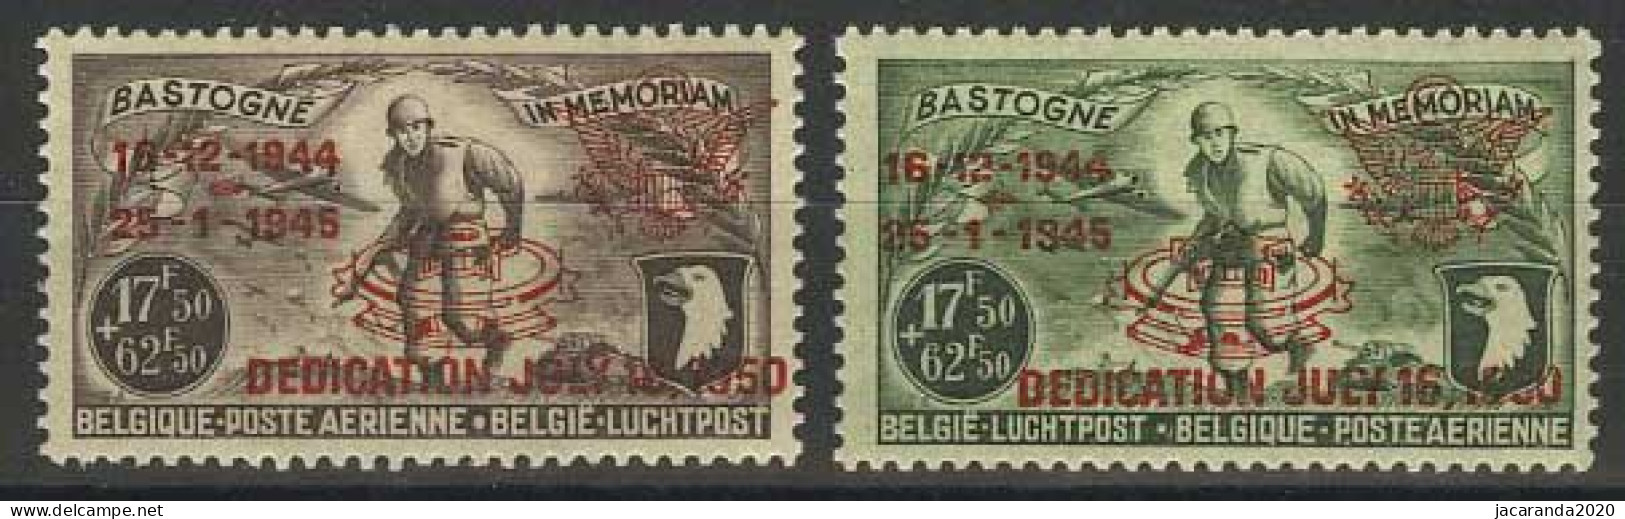 België PR113/14 ** - Luchtpostzegels PA12/13 Met Opdruk "Dedication July 16. 1950" - Privat- Und Lokalpost [PR & LO]